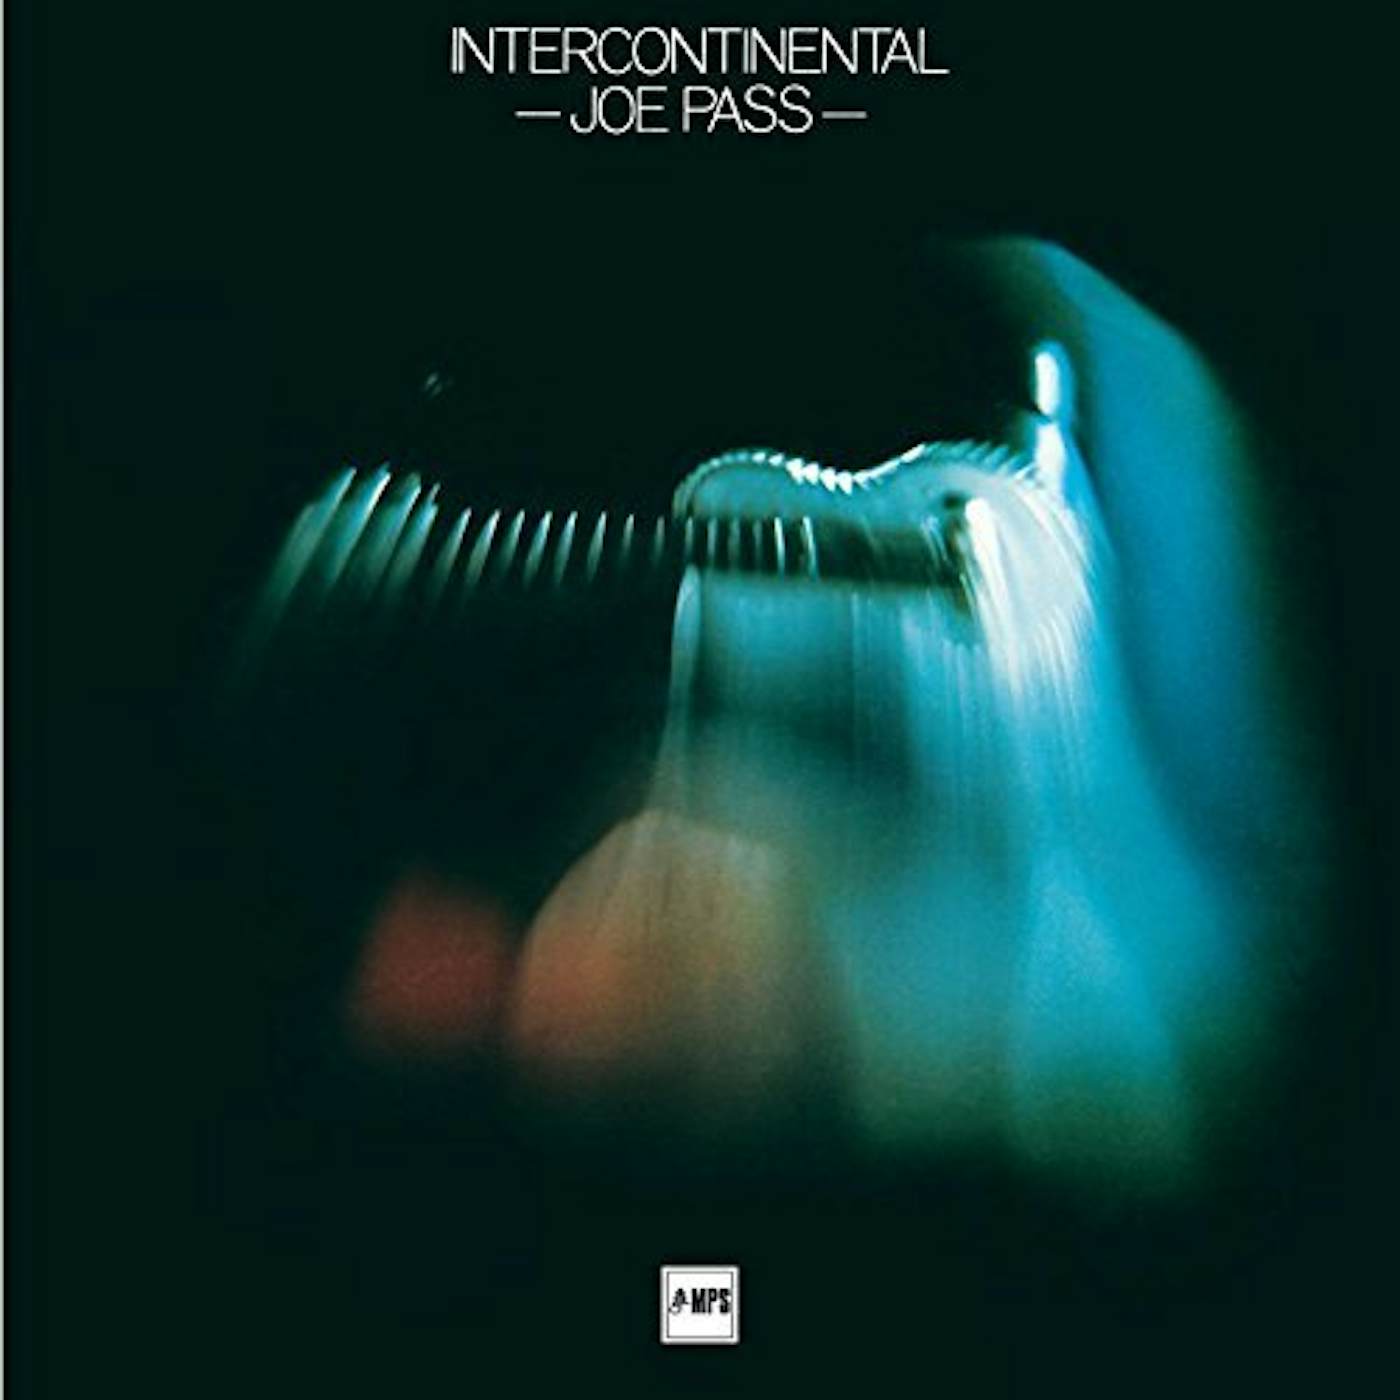 Joe Pass Intercontinental Vinyl Record